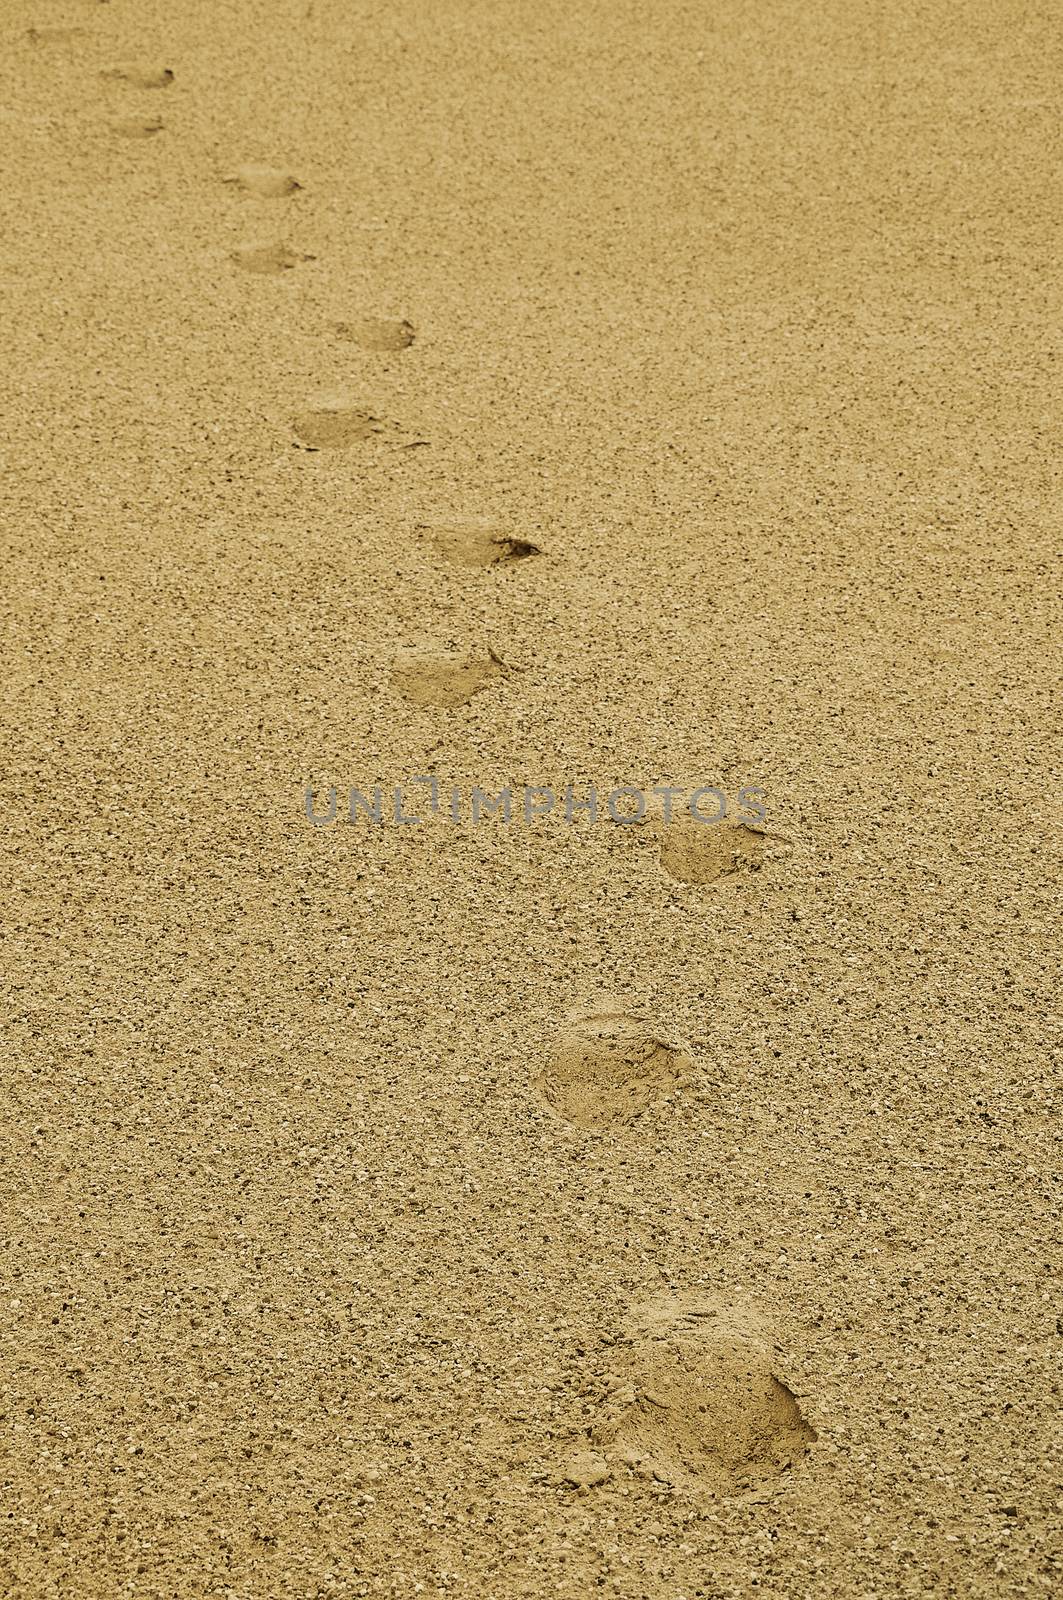 footprints on sand  background in desert beach by jordano